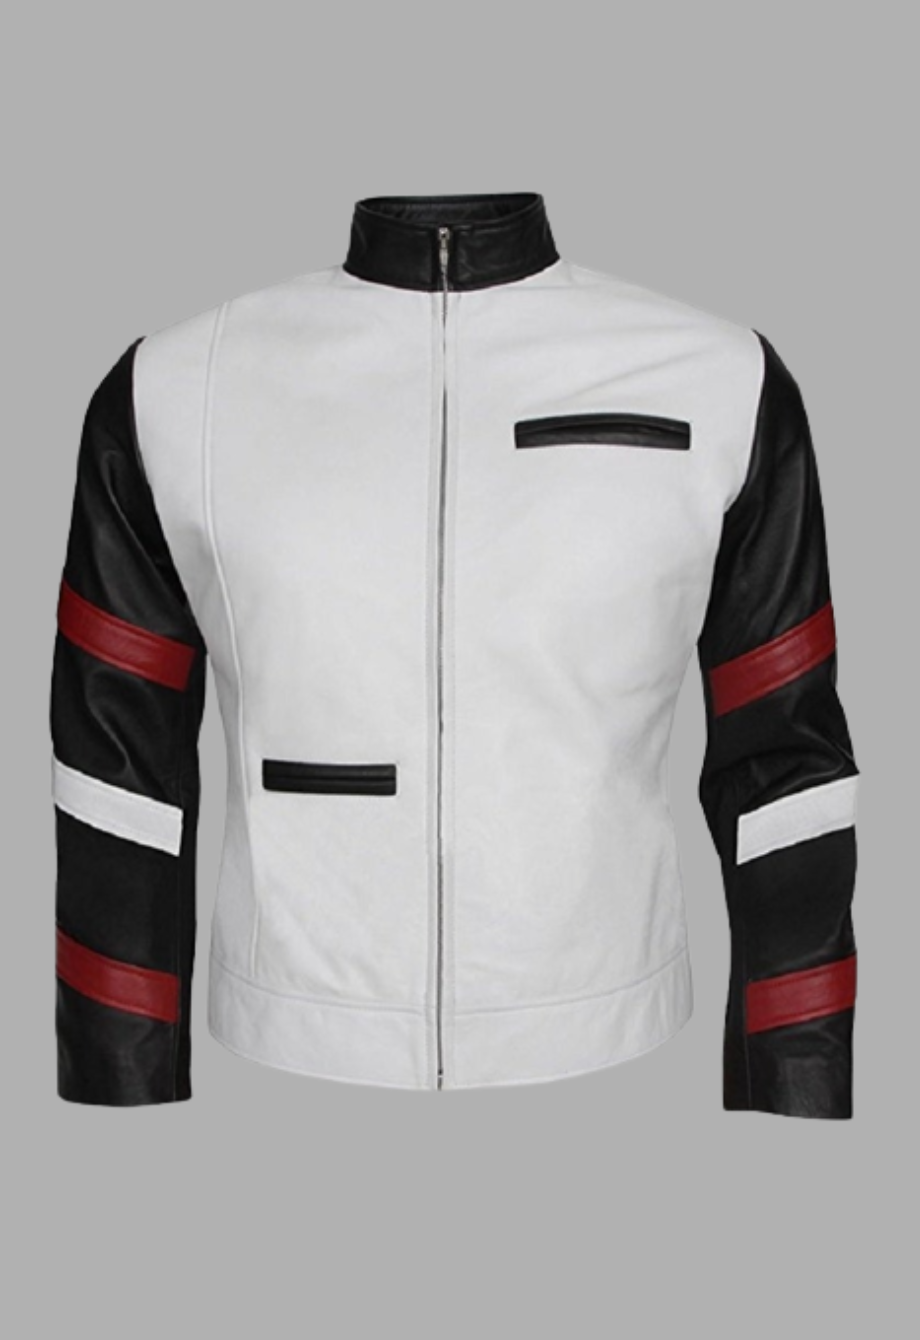 Mens Stylish Sleeves White And Black Blended Leather Jacket